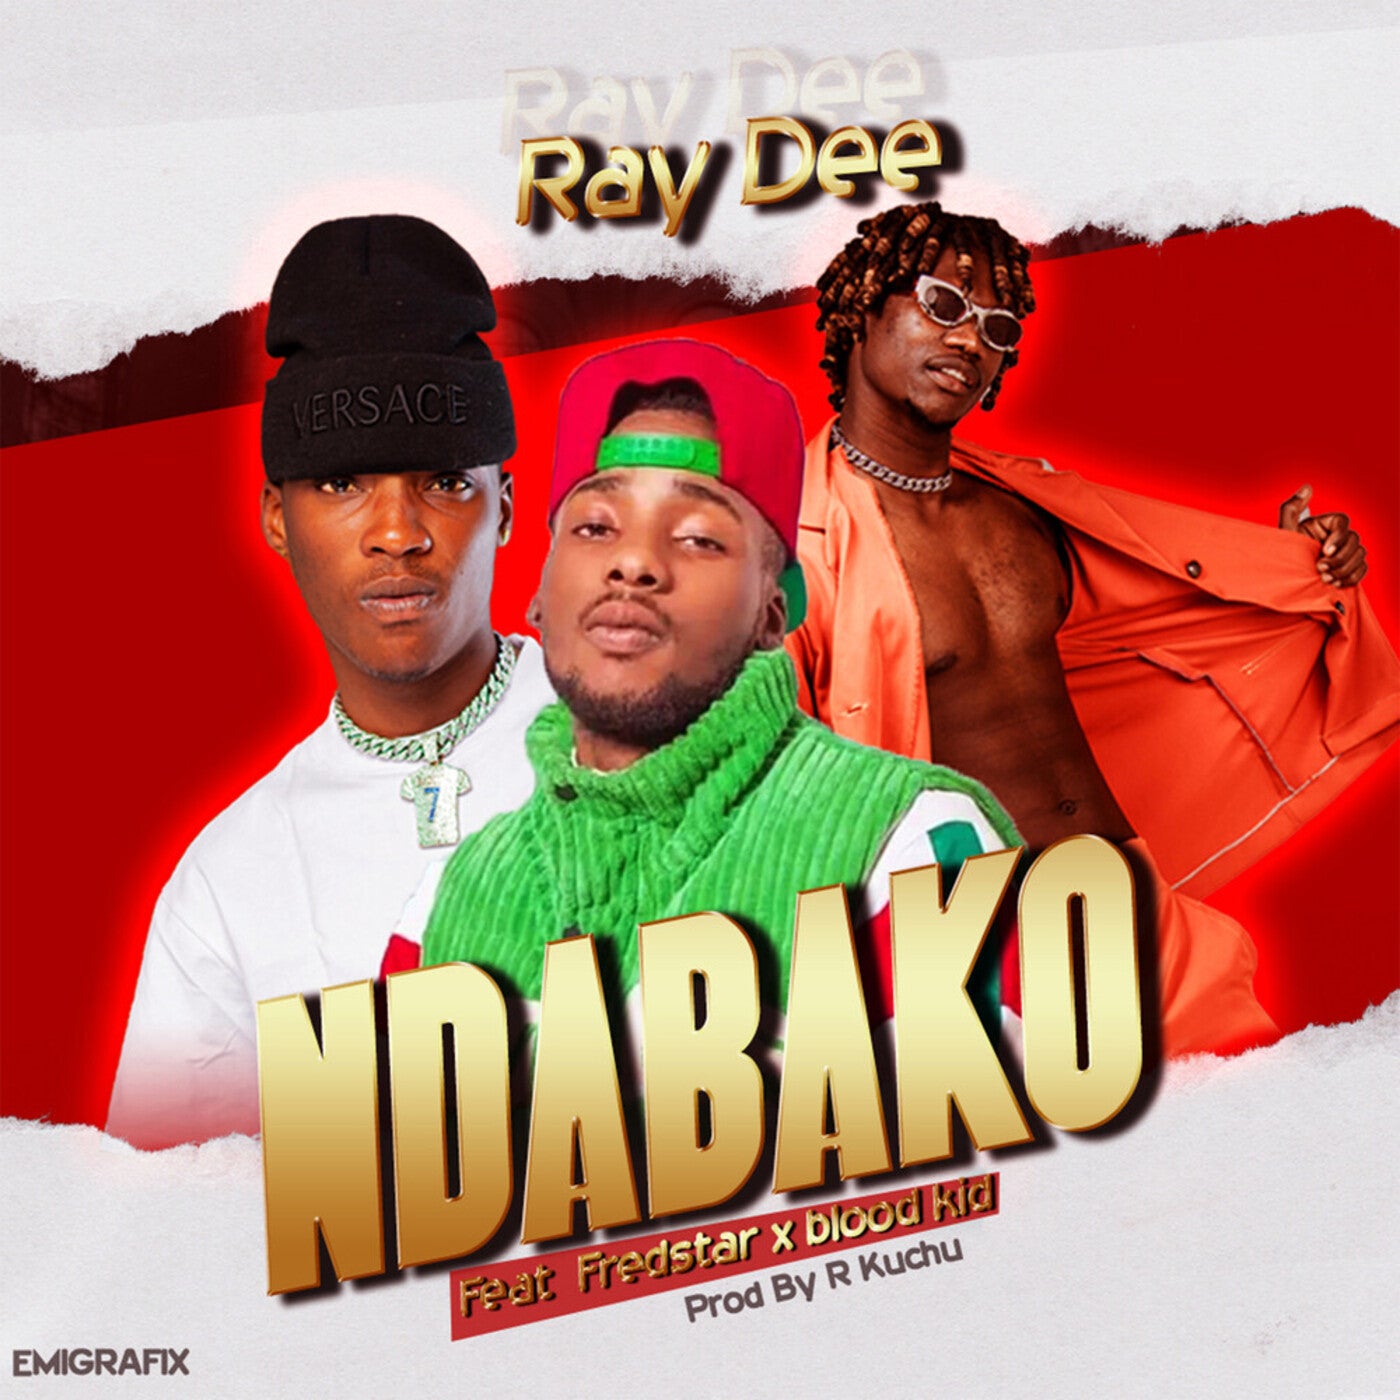 Ndabako by BLOOD KID yvok, RAY DEE 408 and Fredstar on Beatsource